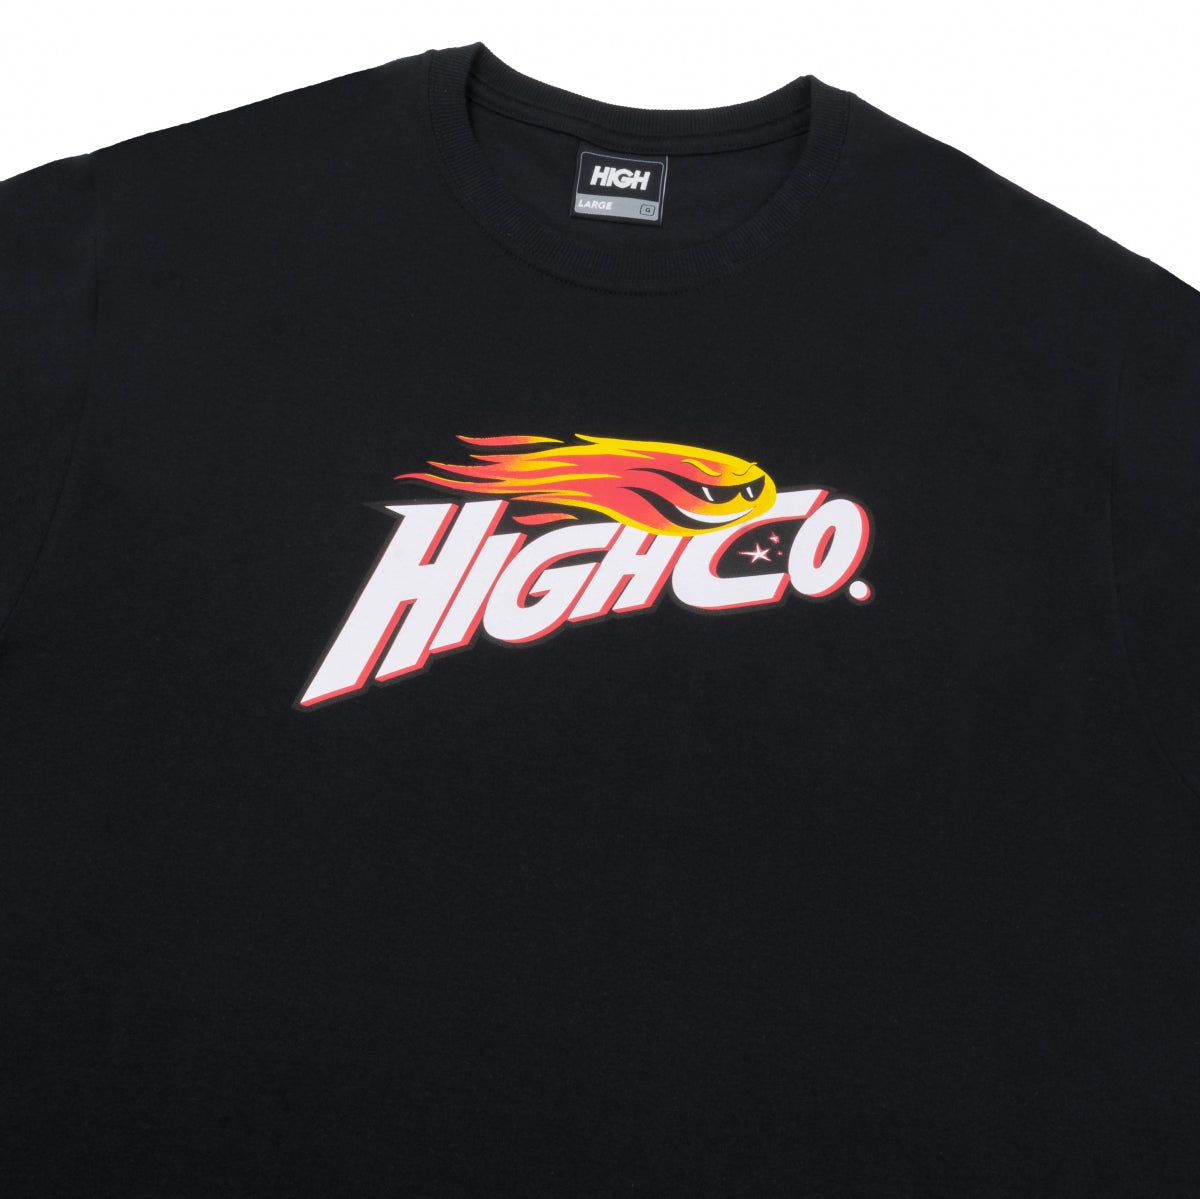 HIGH - Camiseta Comet Black - Slow Office